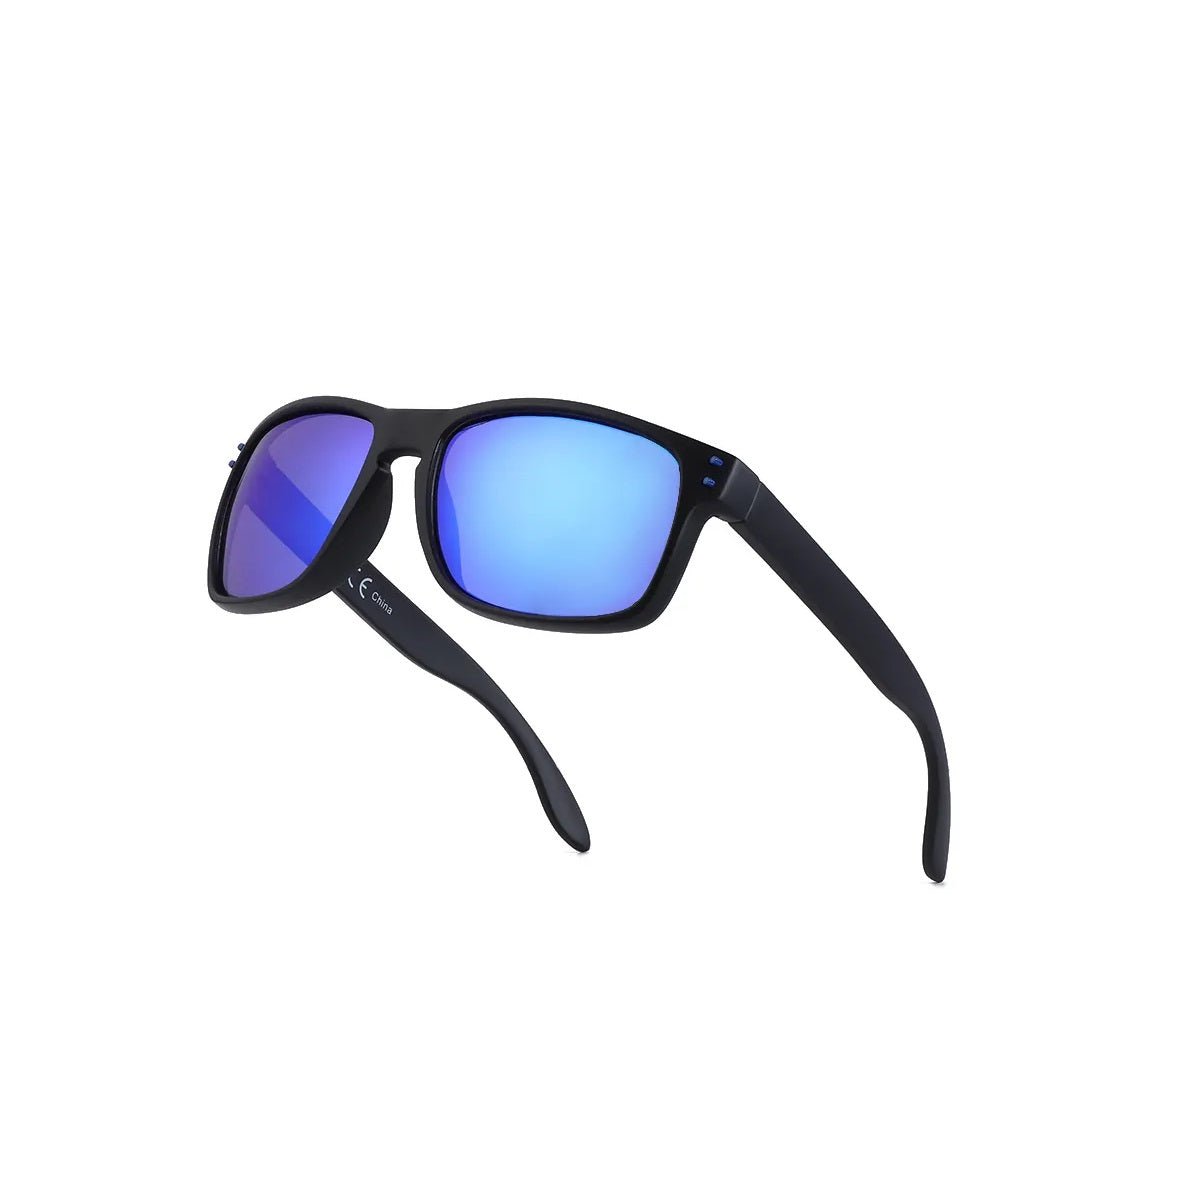 UV400 Radiation Protection Polarised Sunglasses - UVA & UVB Protection